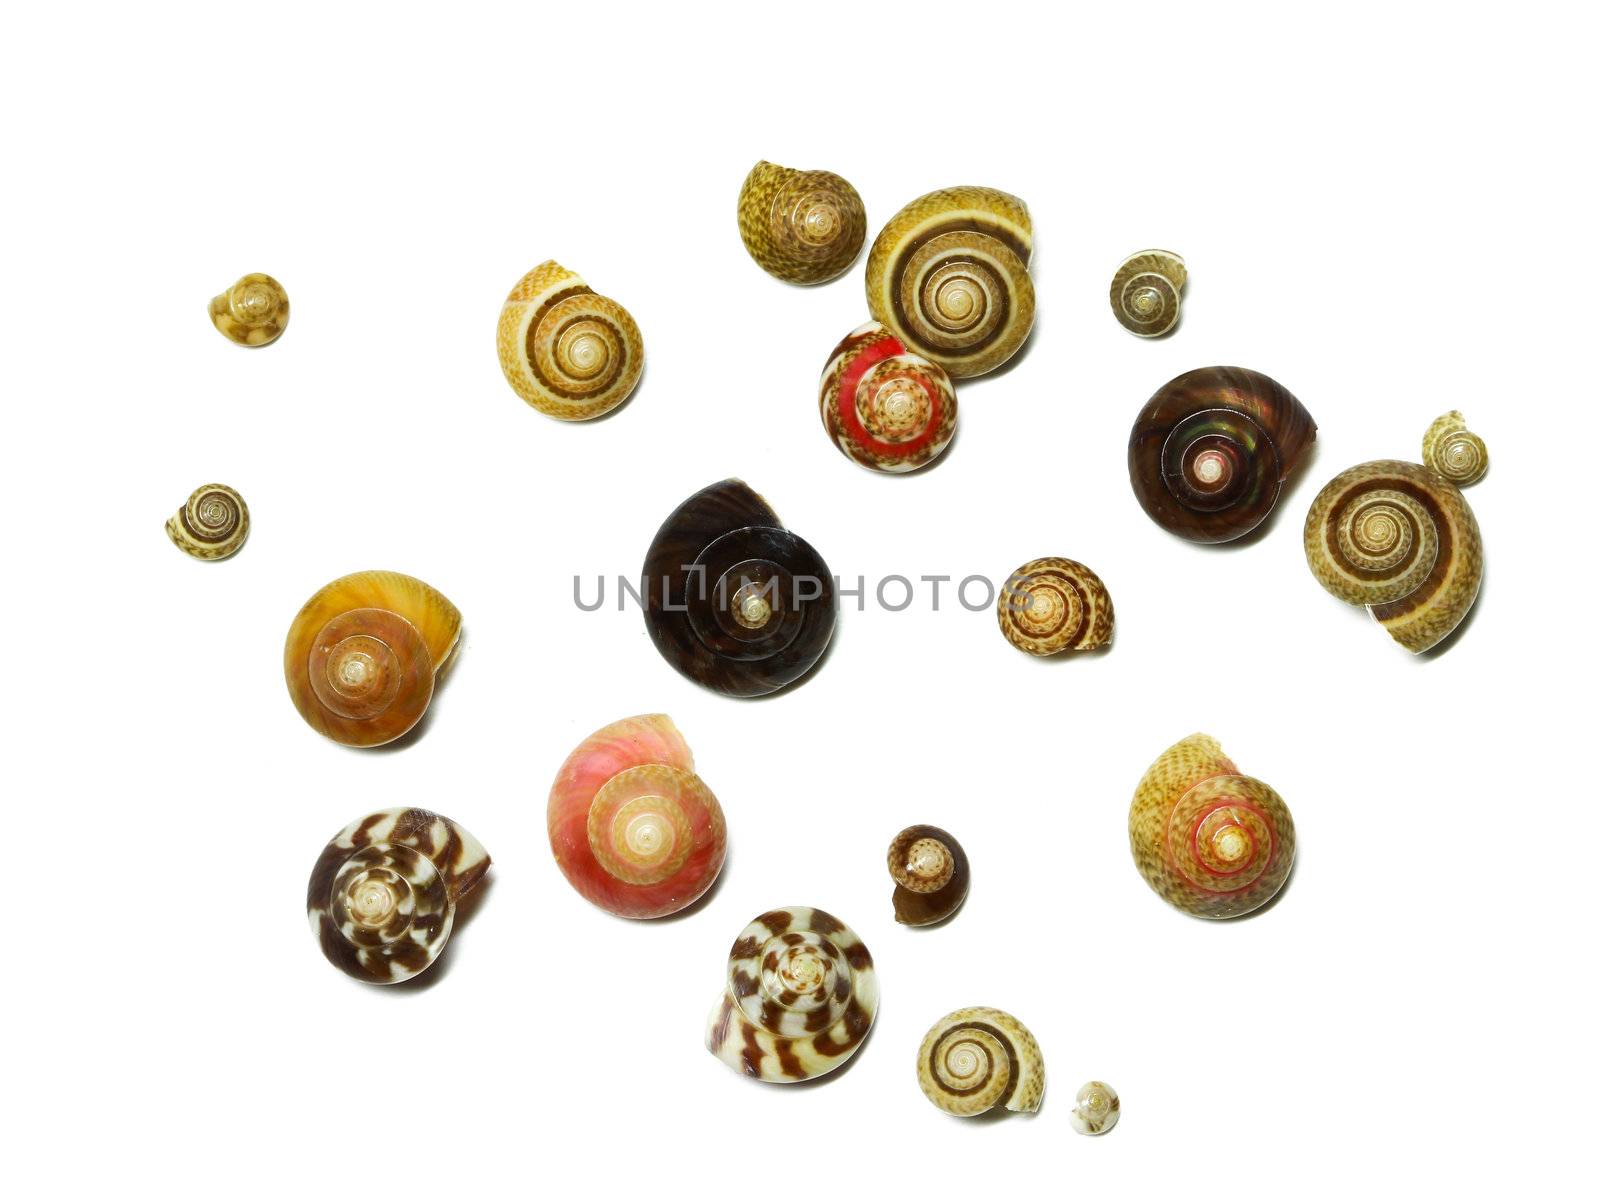 An image of seashells on white background by bajita111122